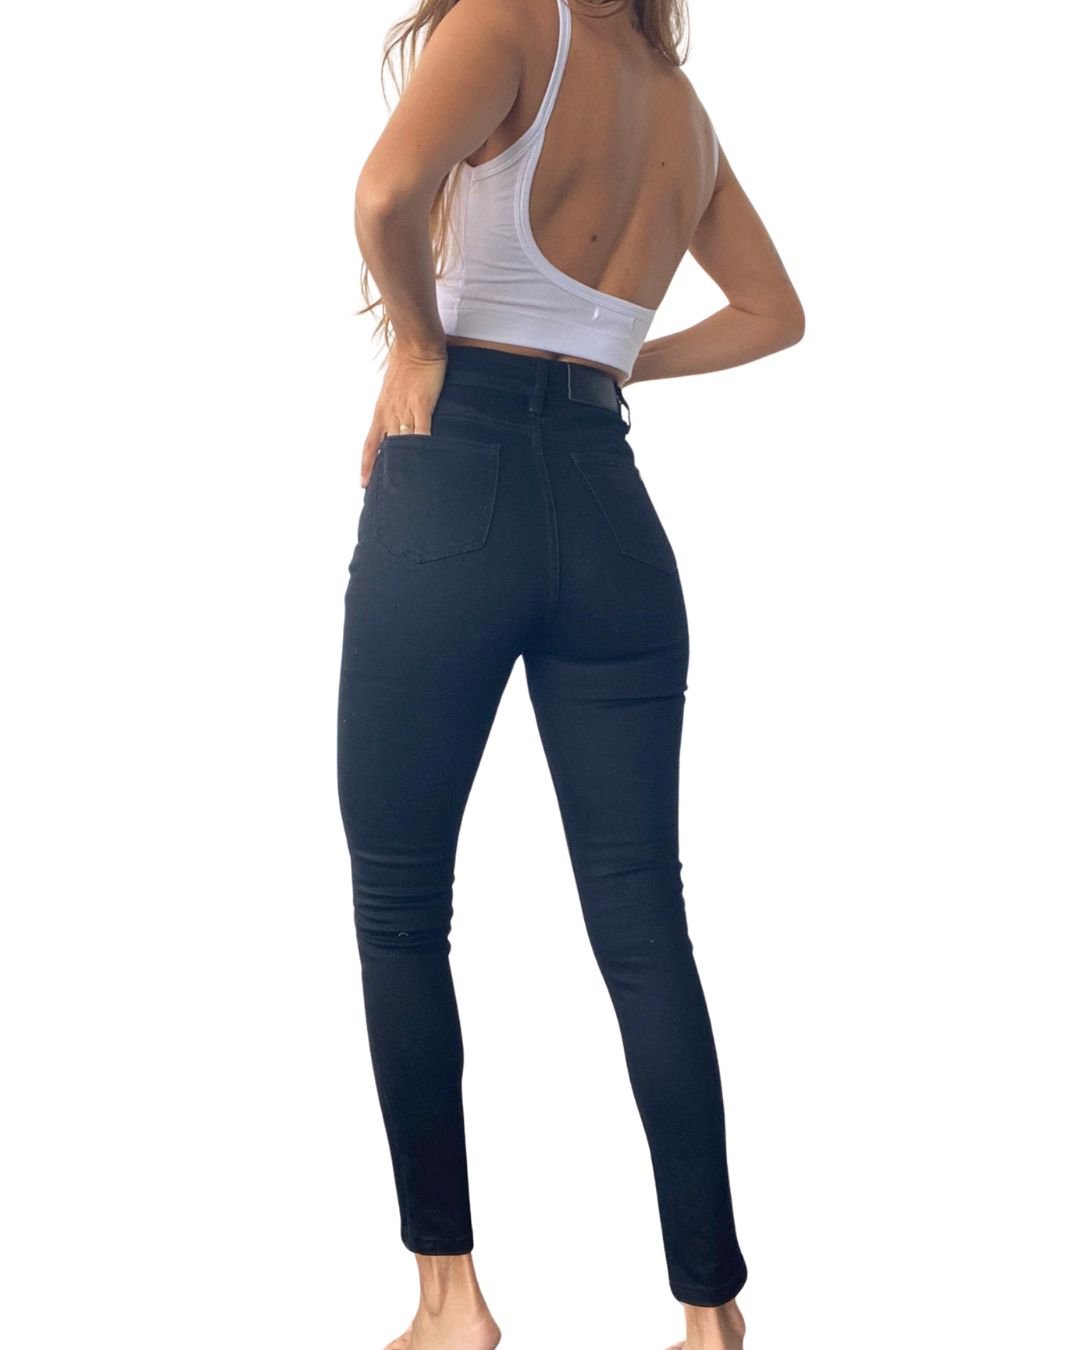 Kayros High-Rise Skinny Jean #FlatteringFit